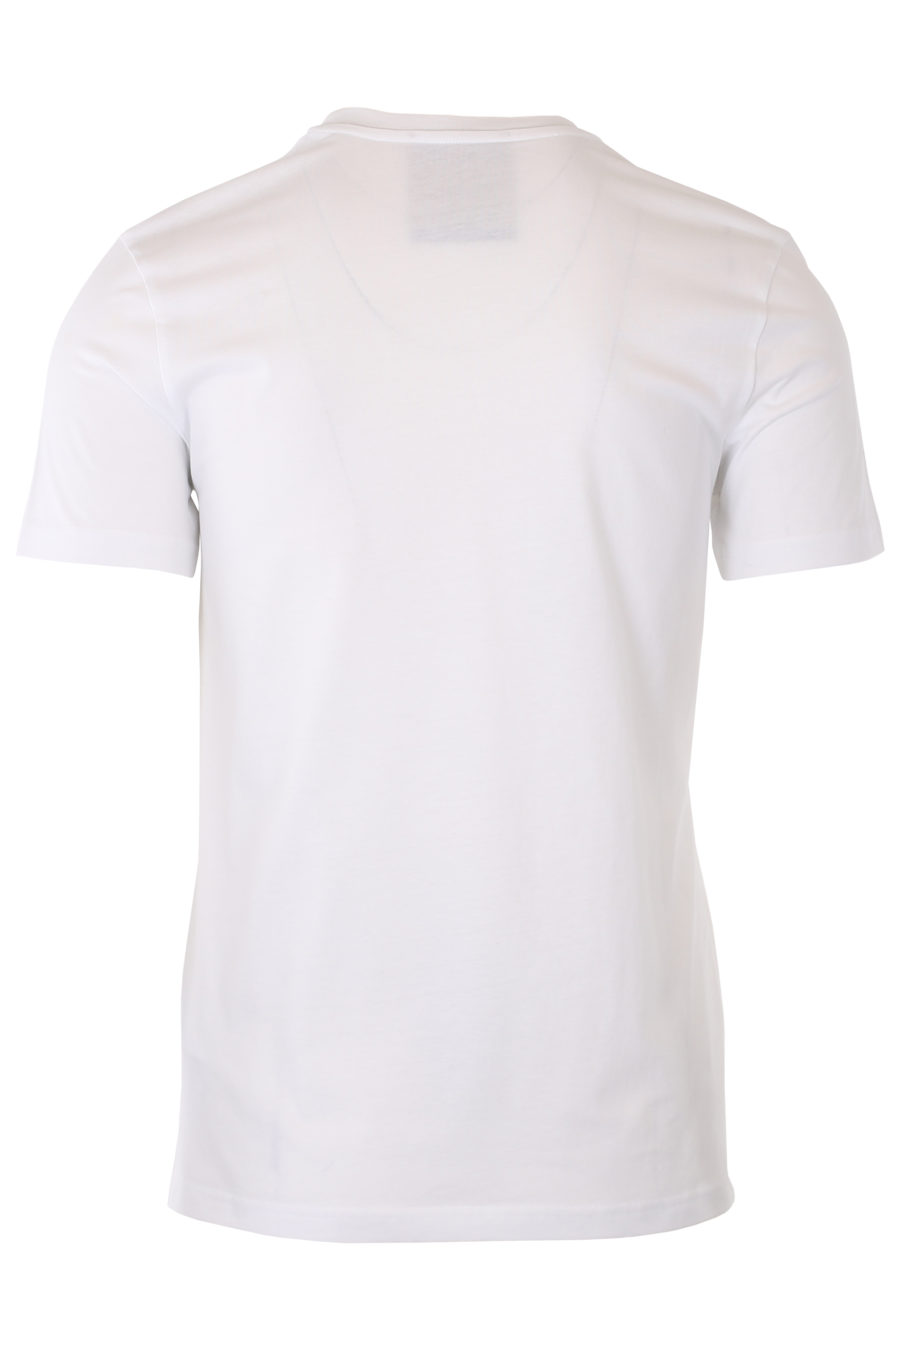 Camiseta blanca con logo negro "fantasy" - IMG 9343